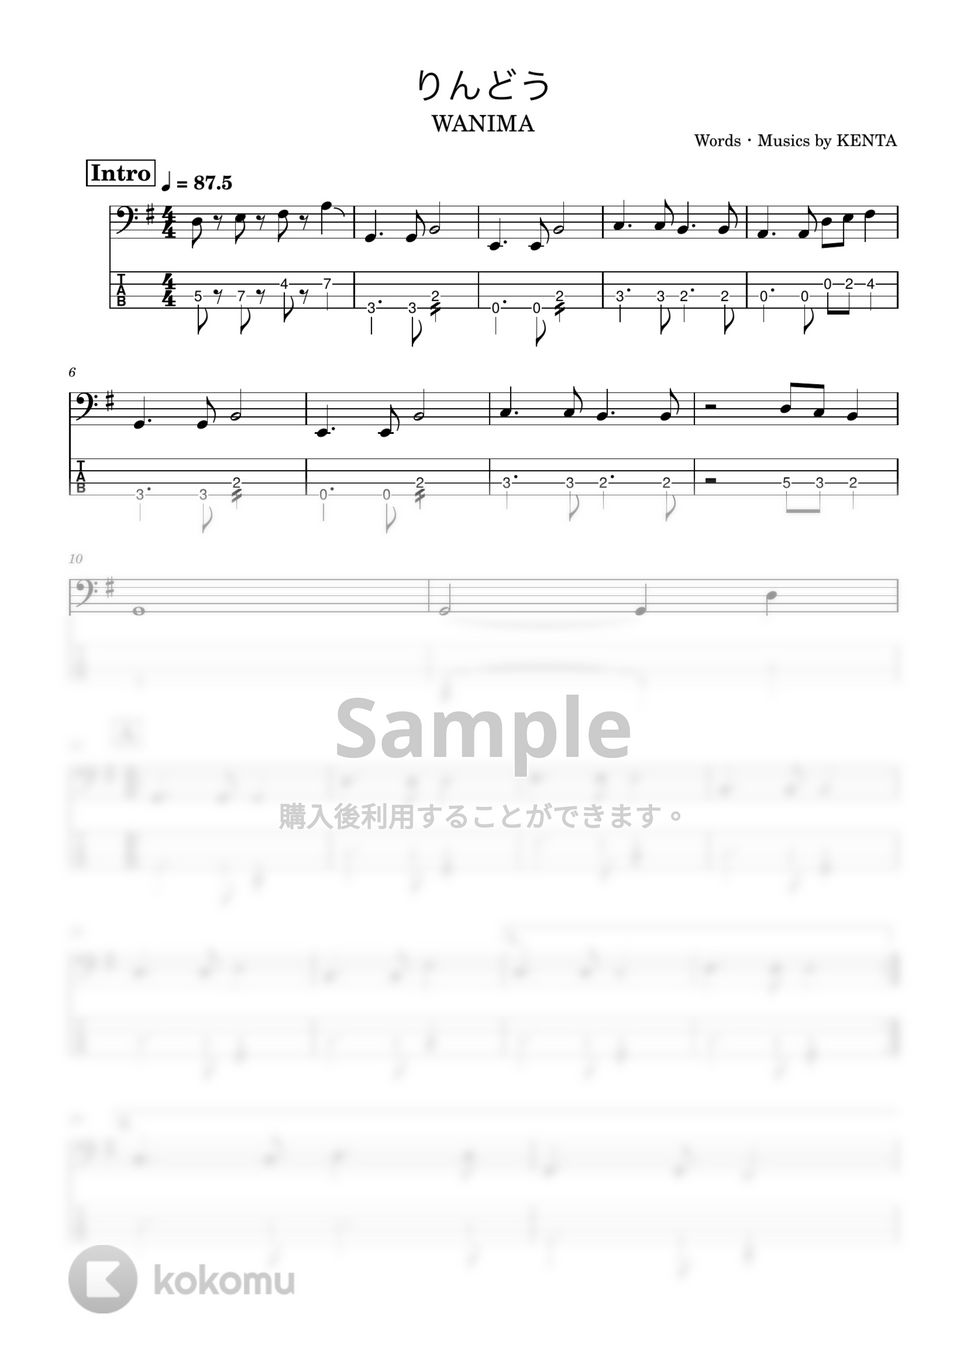 WANIMA - りんどう (Bass tab譜) by Zeo